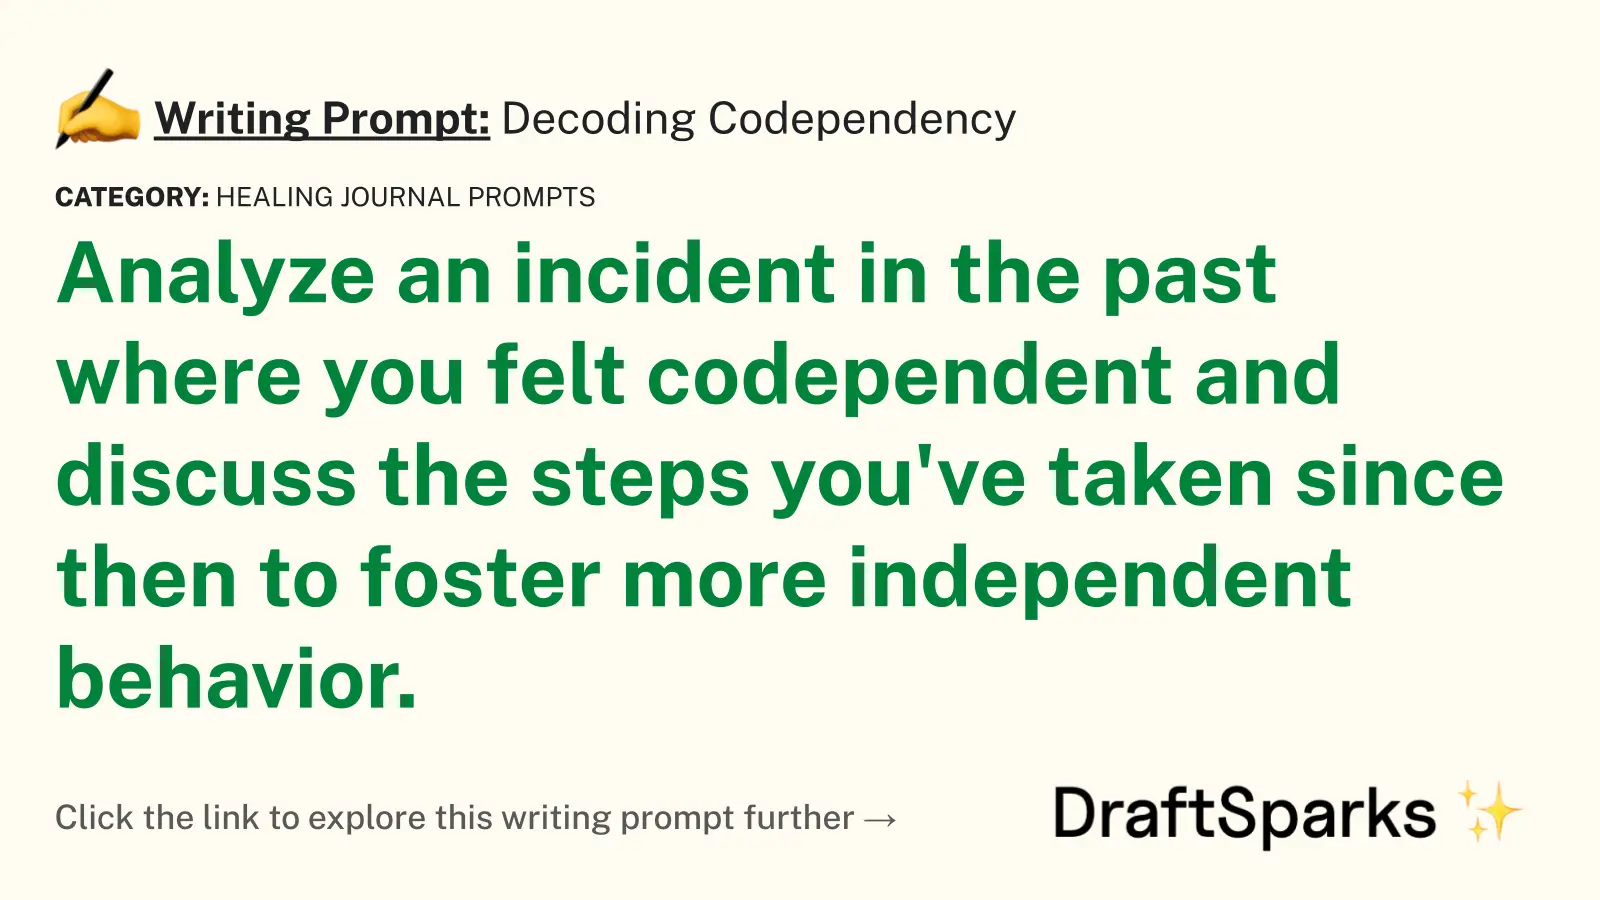 Decoding Codependency